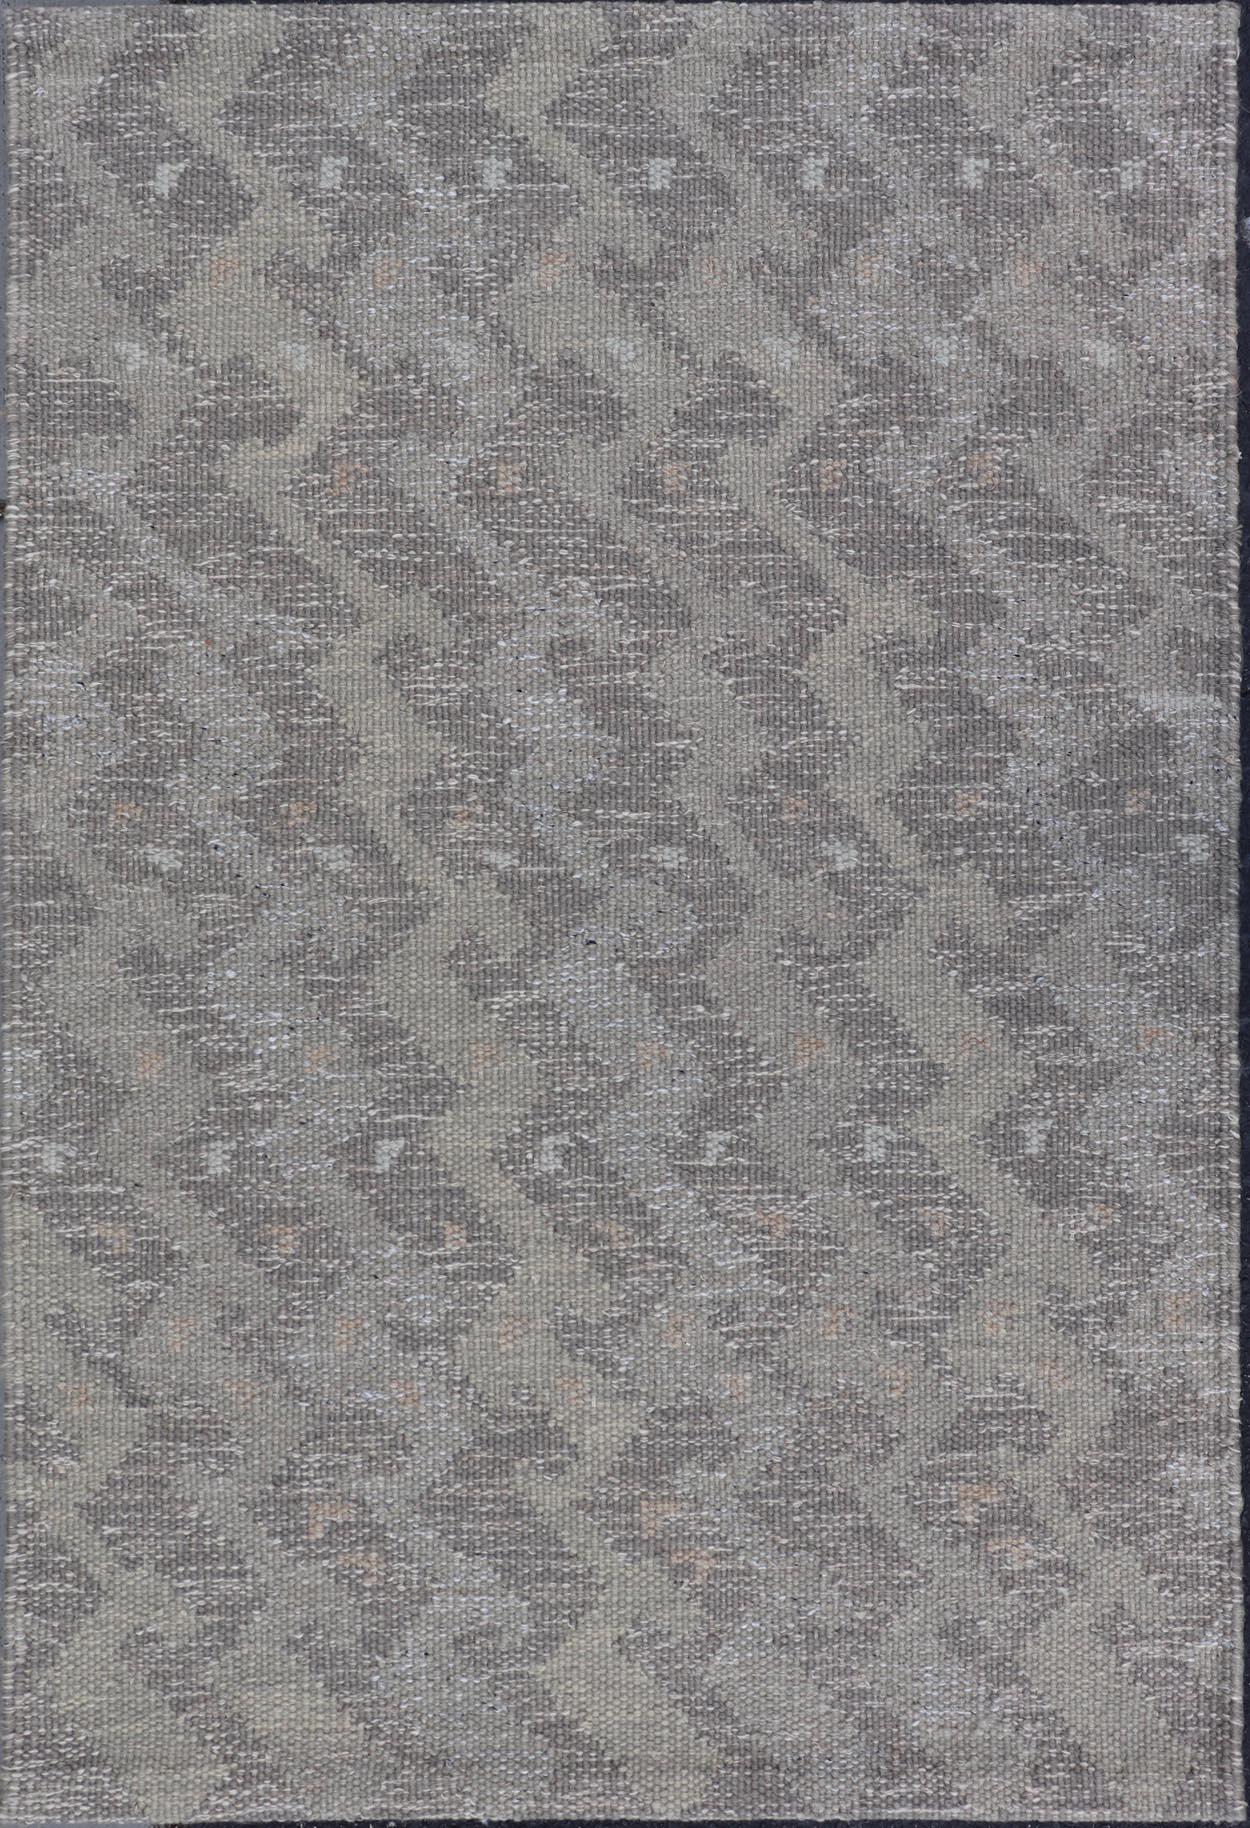 Geometrisch Moderner Skandinavischer Flachgewebeteppich in Grau und Light Gray Tönen